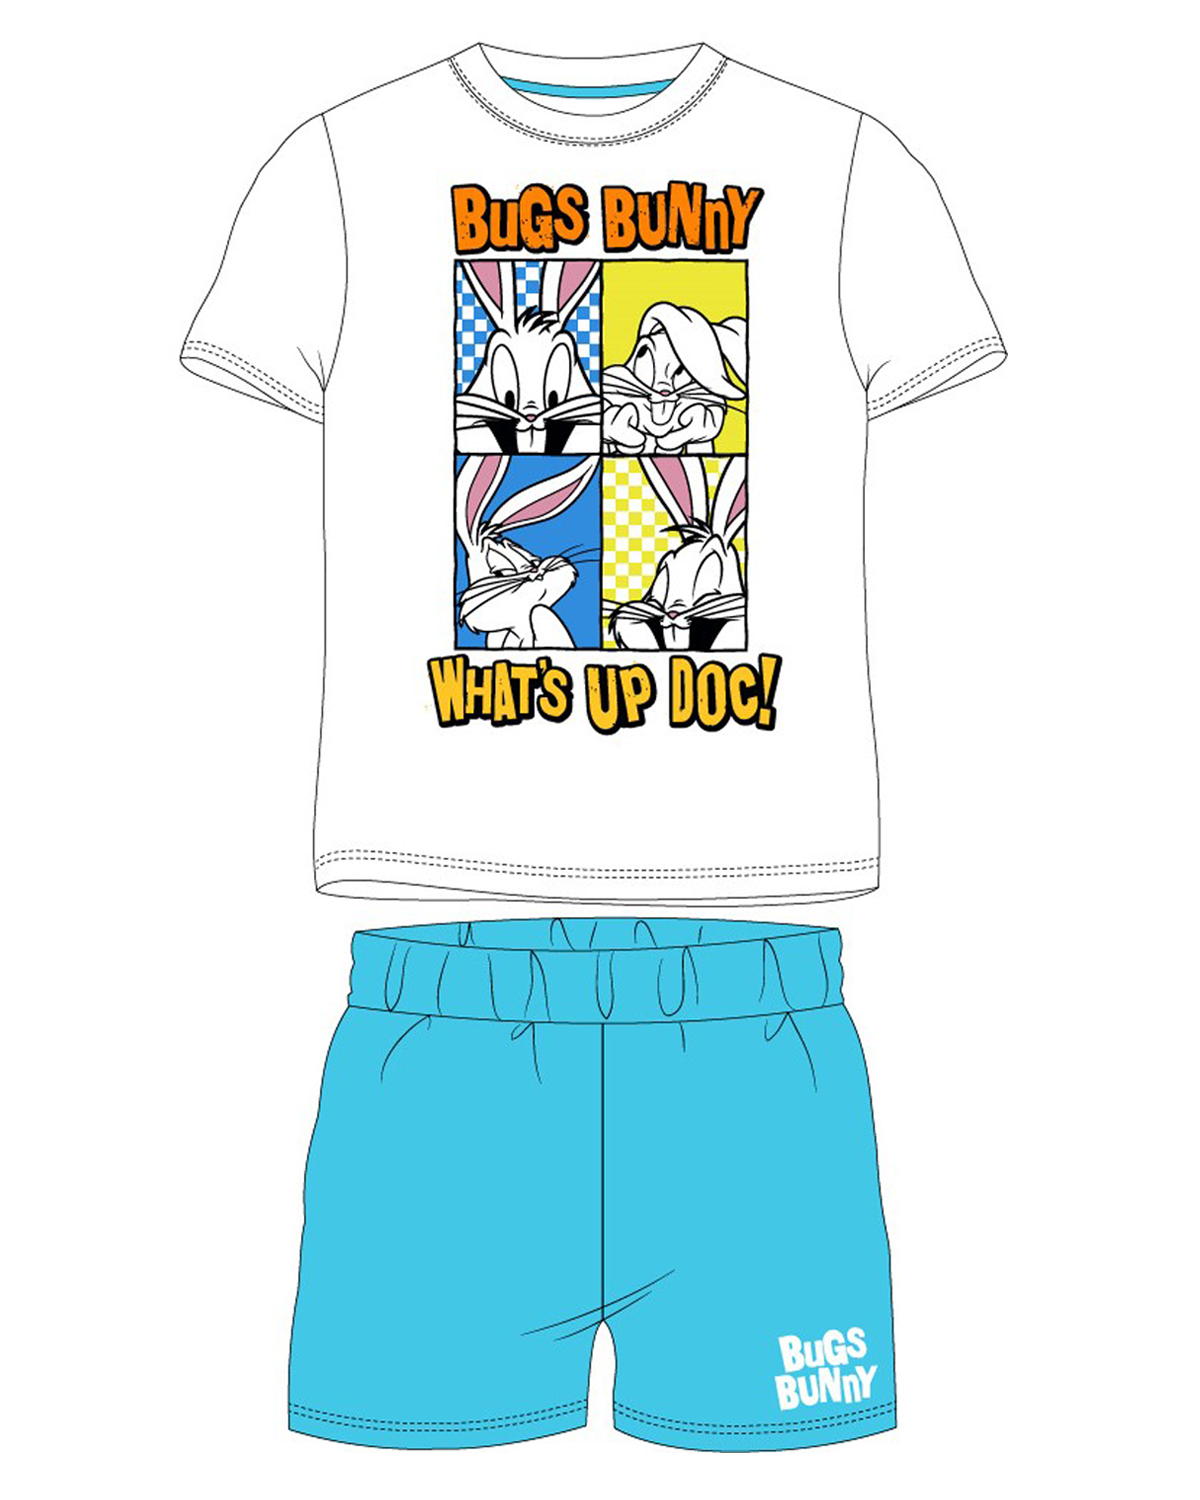 Looney Tunes - licence Chlapecké pyžamo - Looney Tunes 5204582, bílá / tyrkysová Barva: Bílá, Velikost: 116